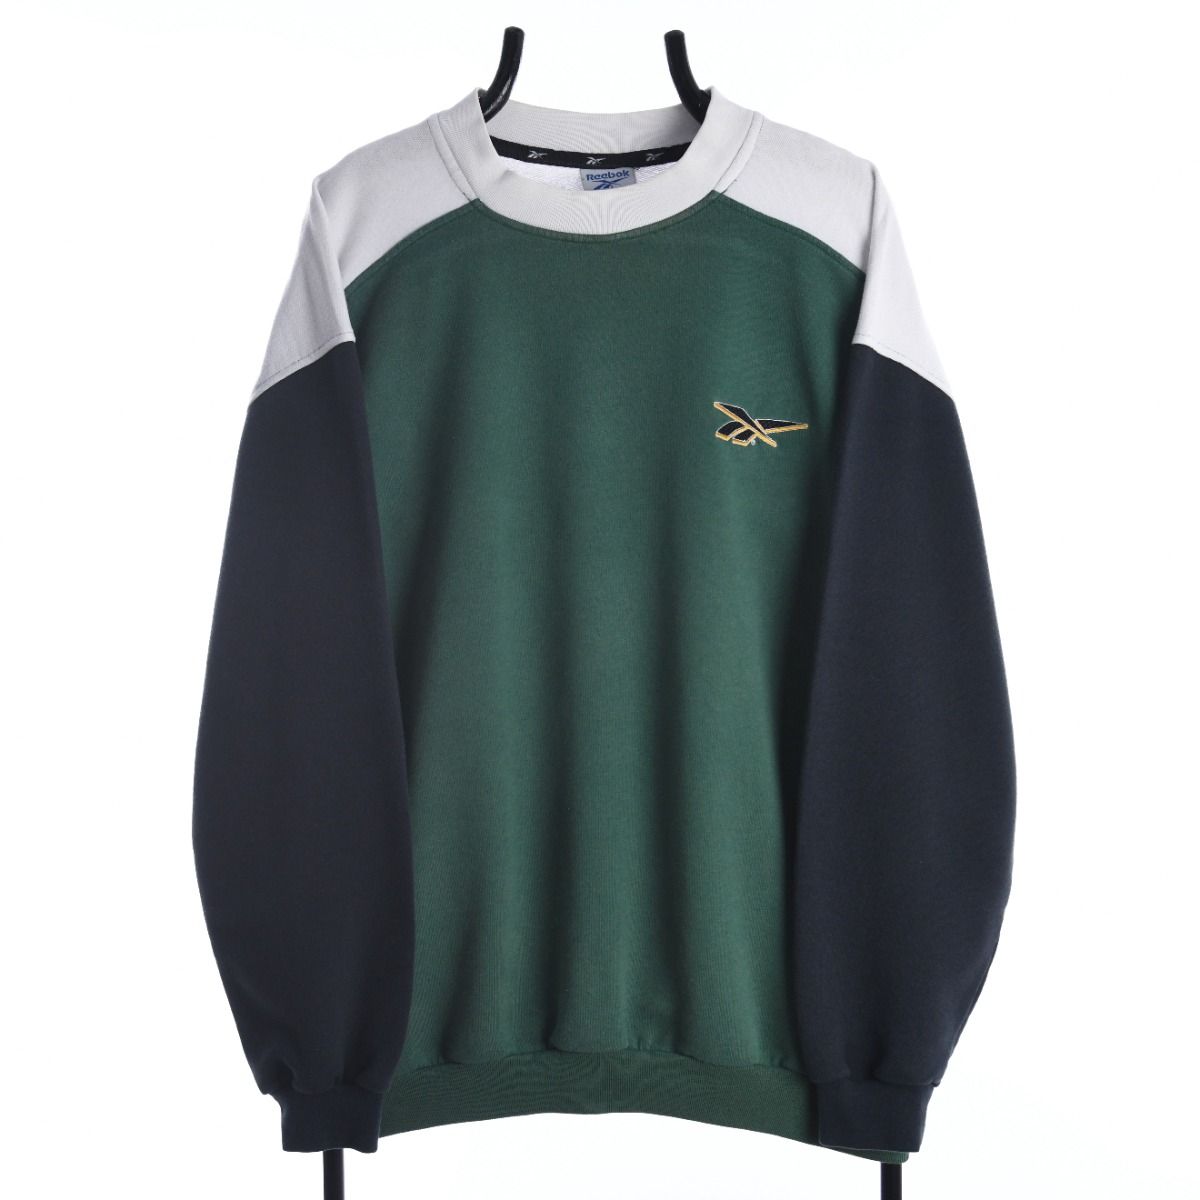 Reebok Early 2000s Sweatshirt